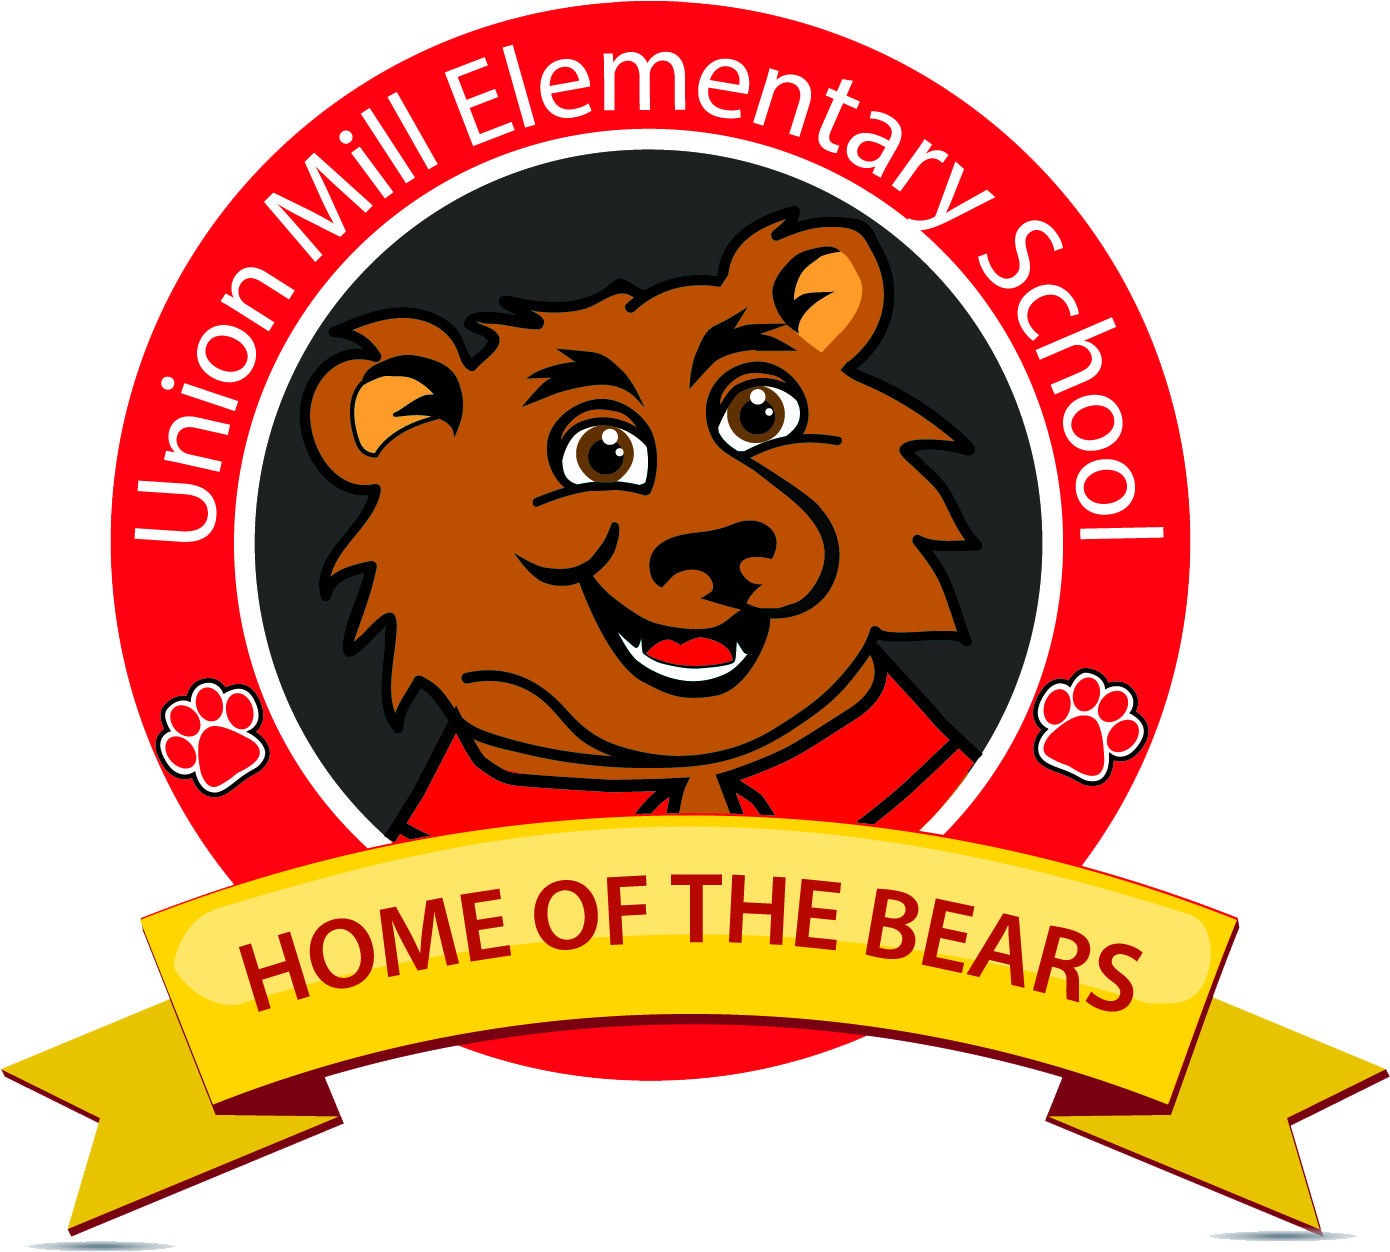 Union Mill Elementary School - Union Mill Elementary School (1446x1256)